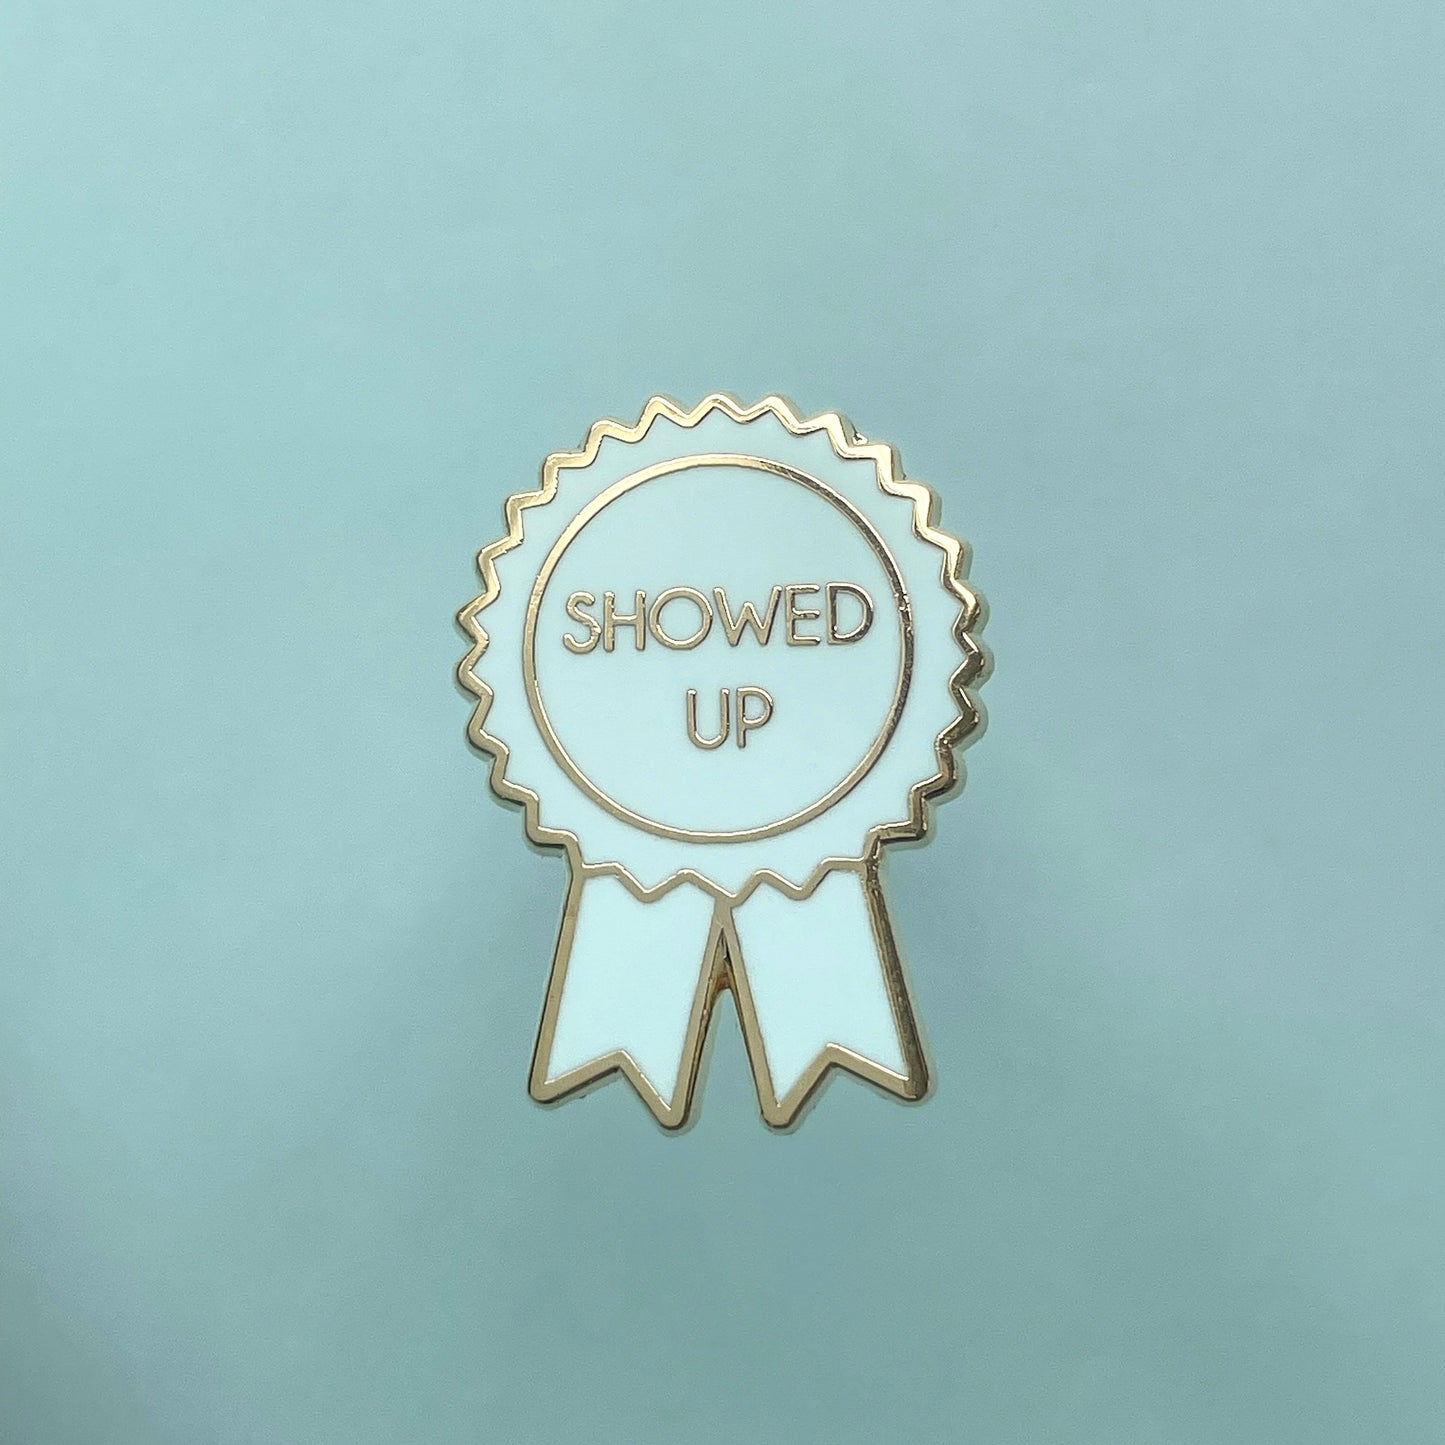 Showed Up Award Enamel Pin